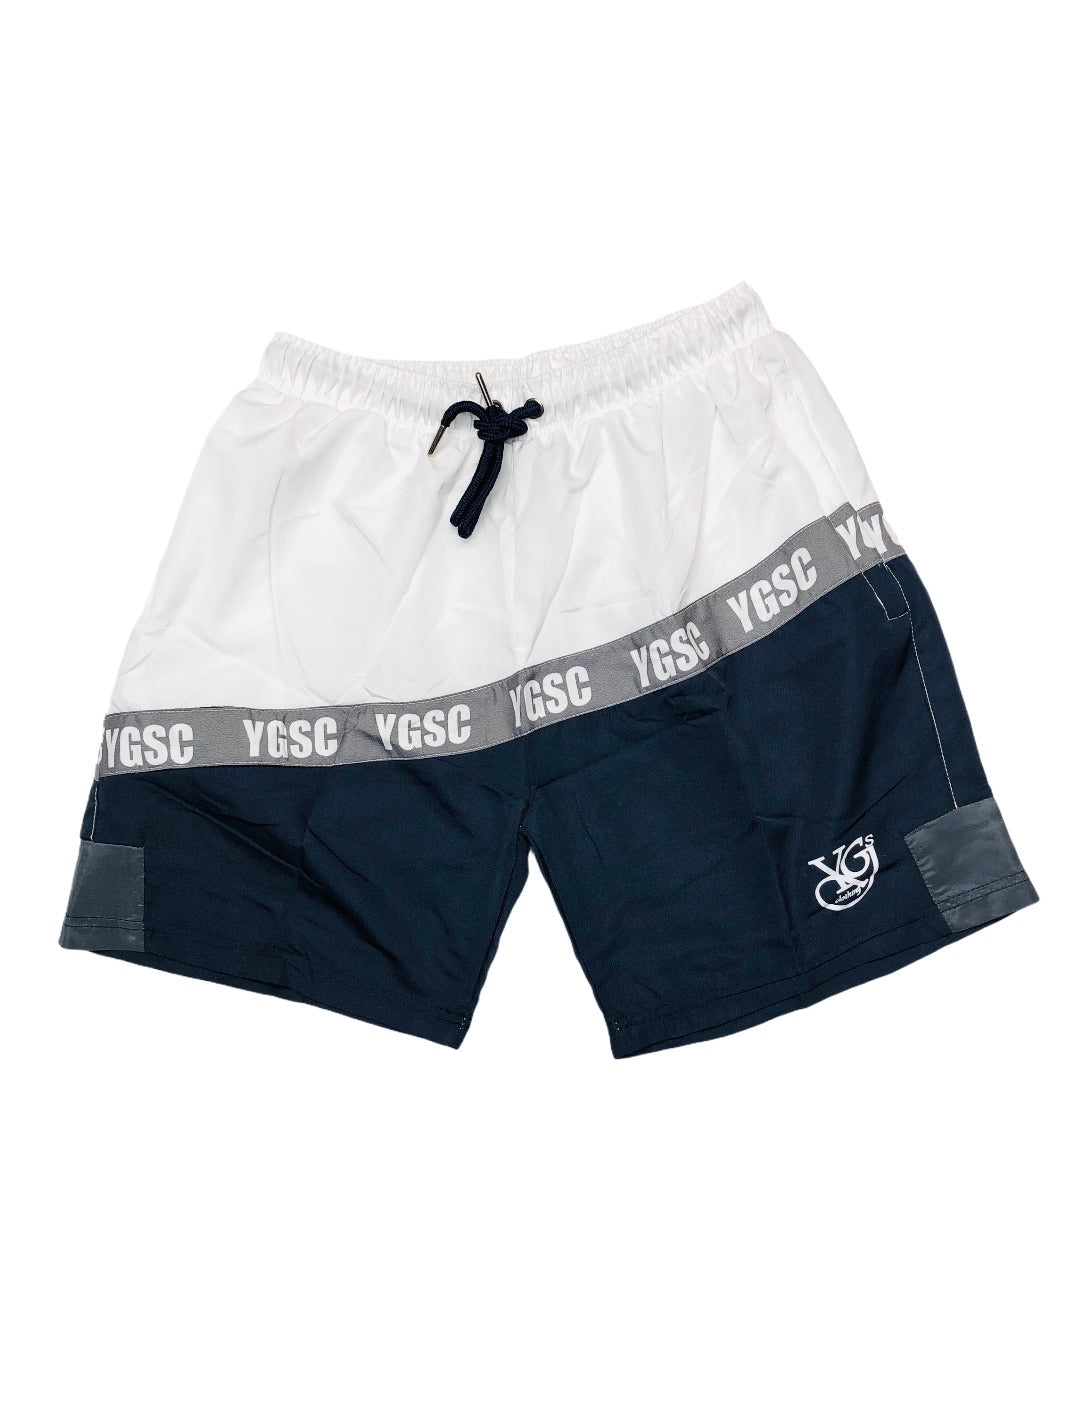 Boys YGSC (Repeat Print) Dri Fit shorts